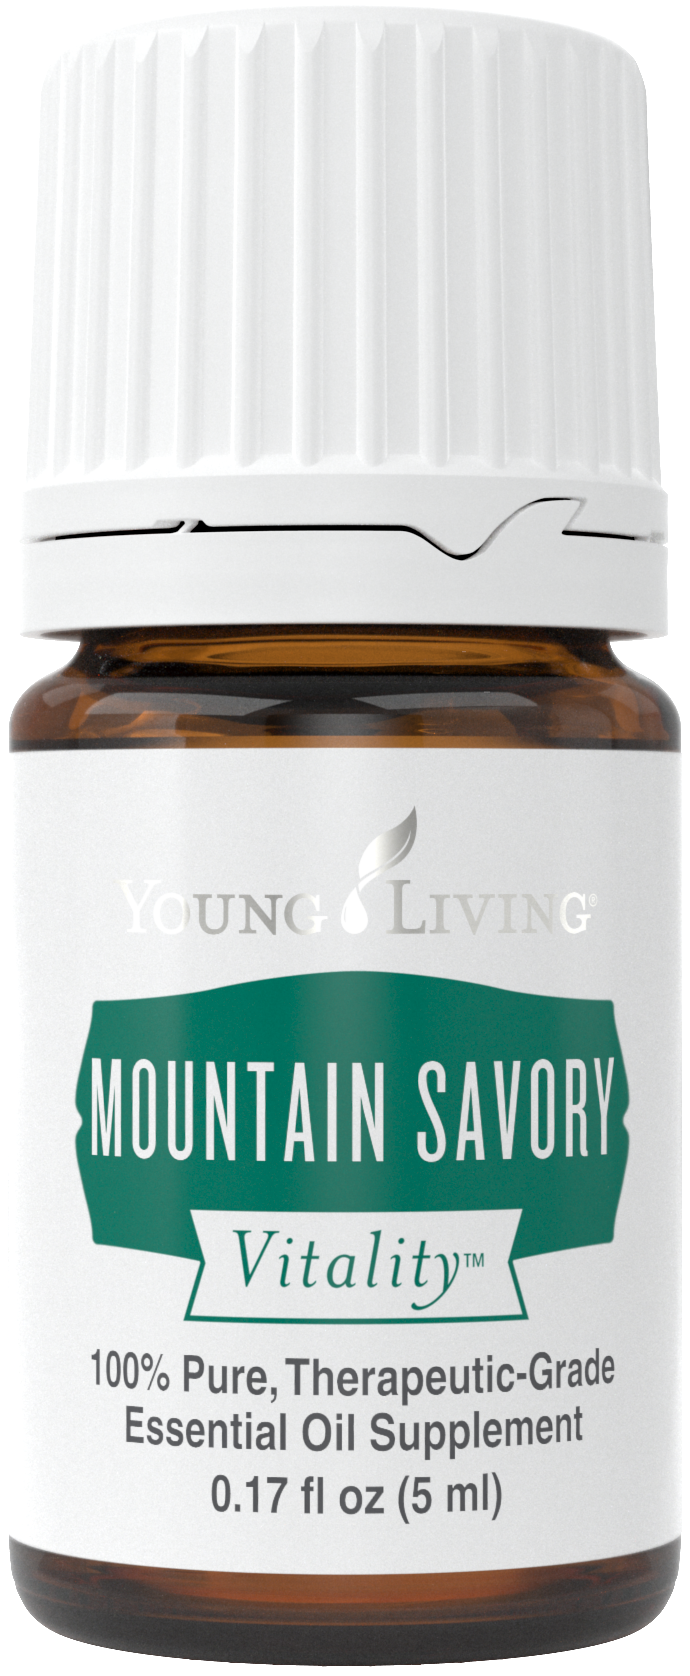 Mountain Savory Vitality Silo.png